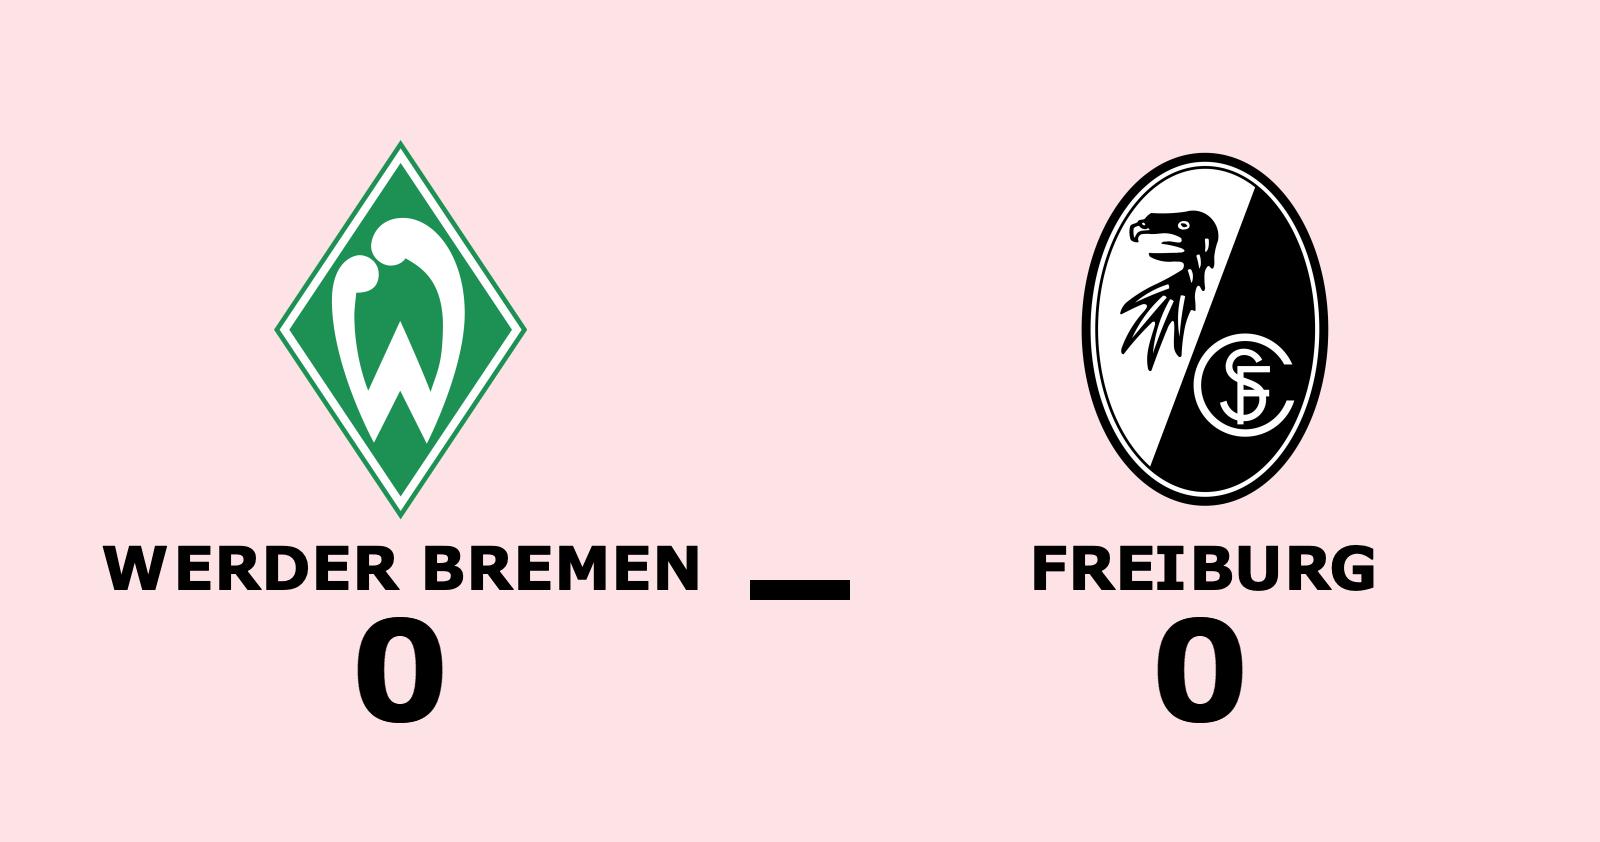 Mållöst när Werder Bremen tog emot Freiburg